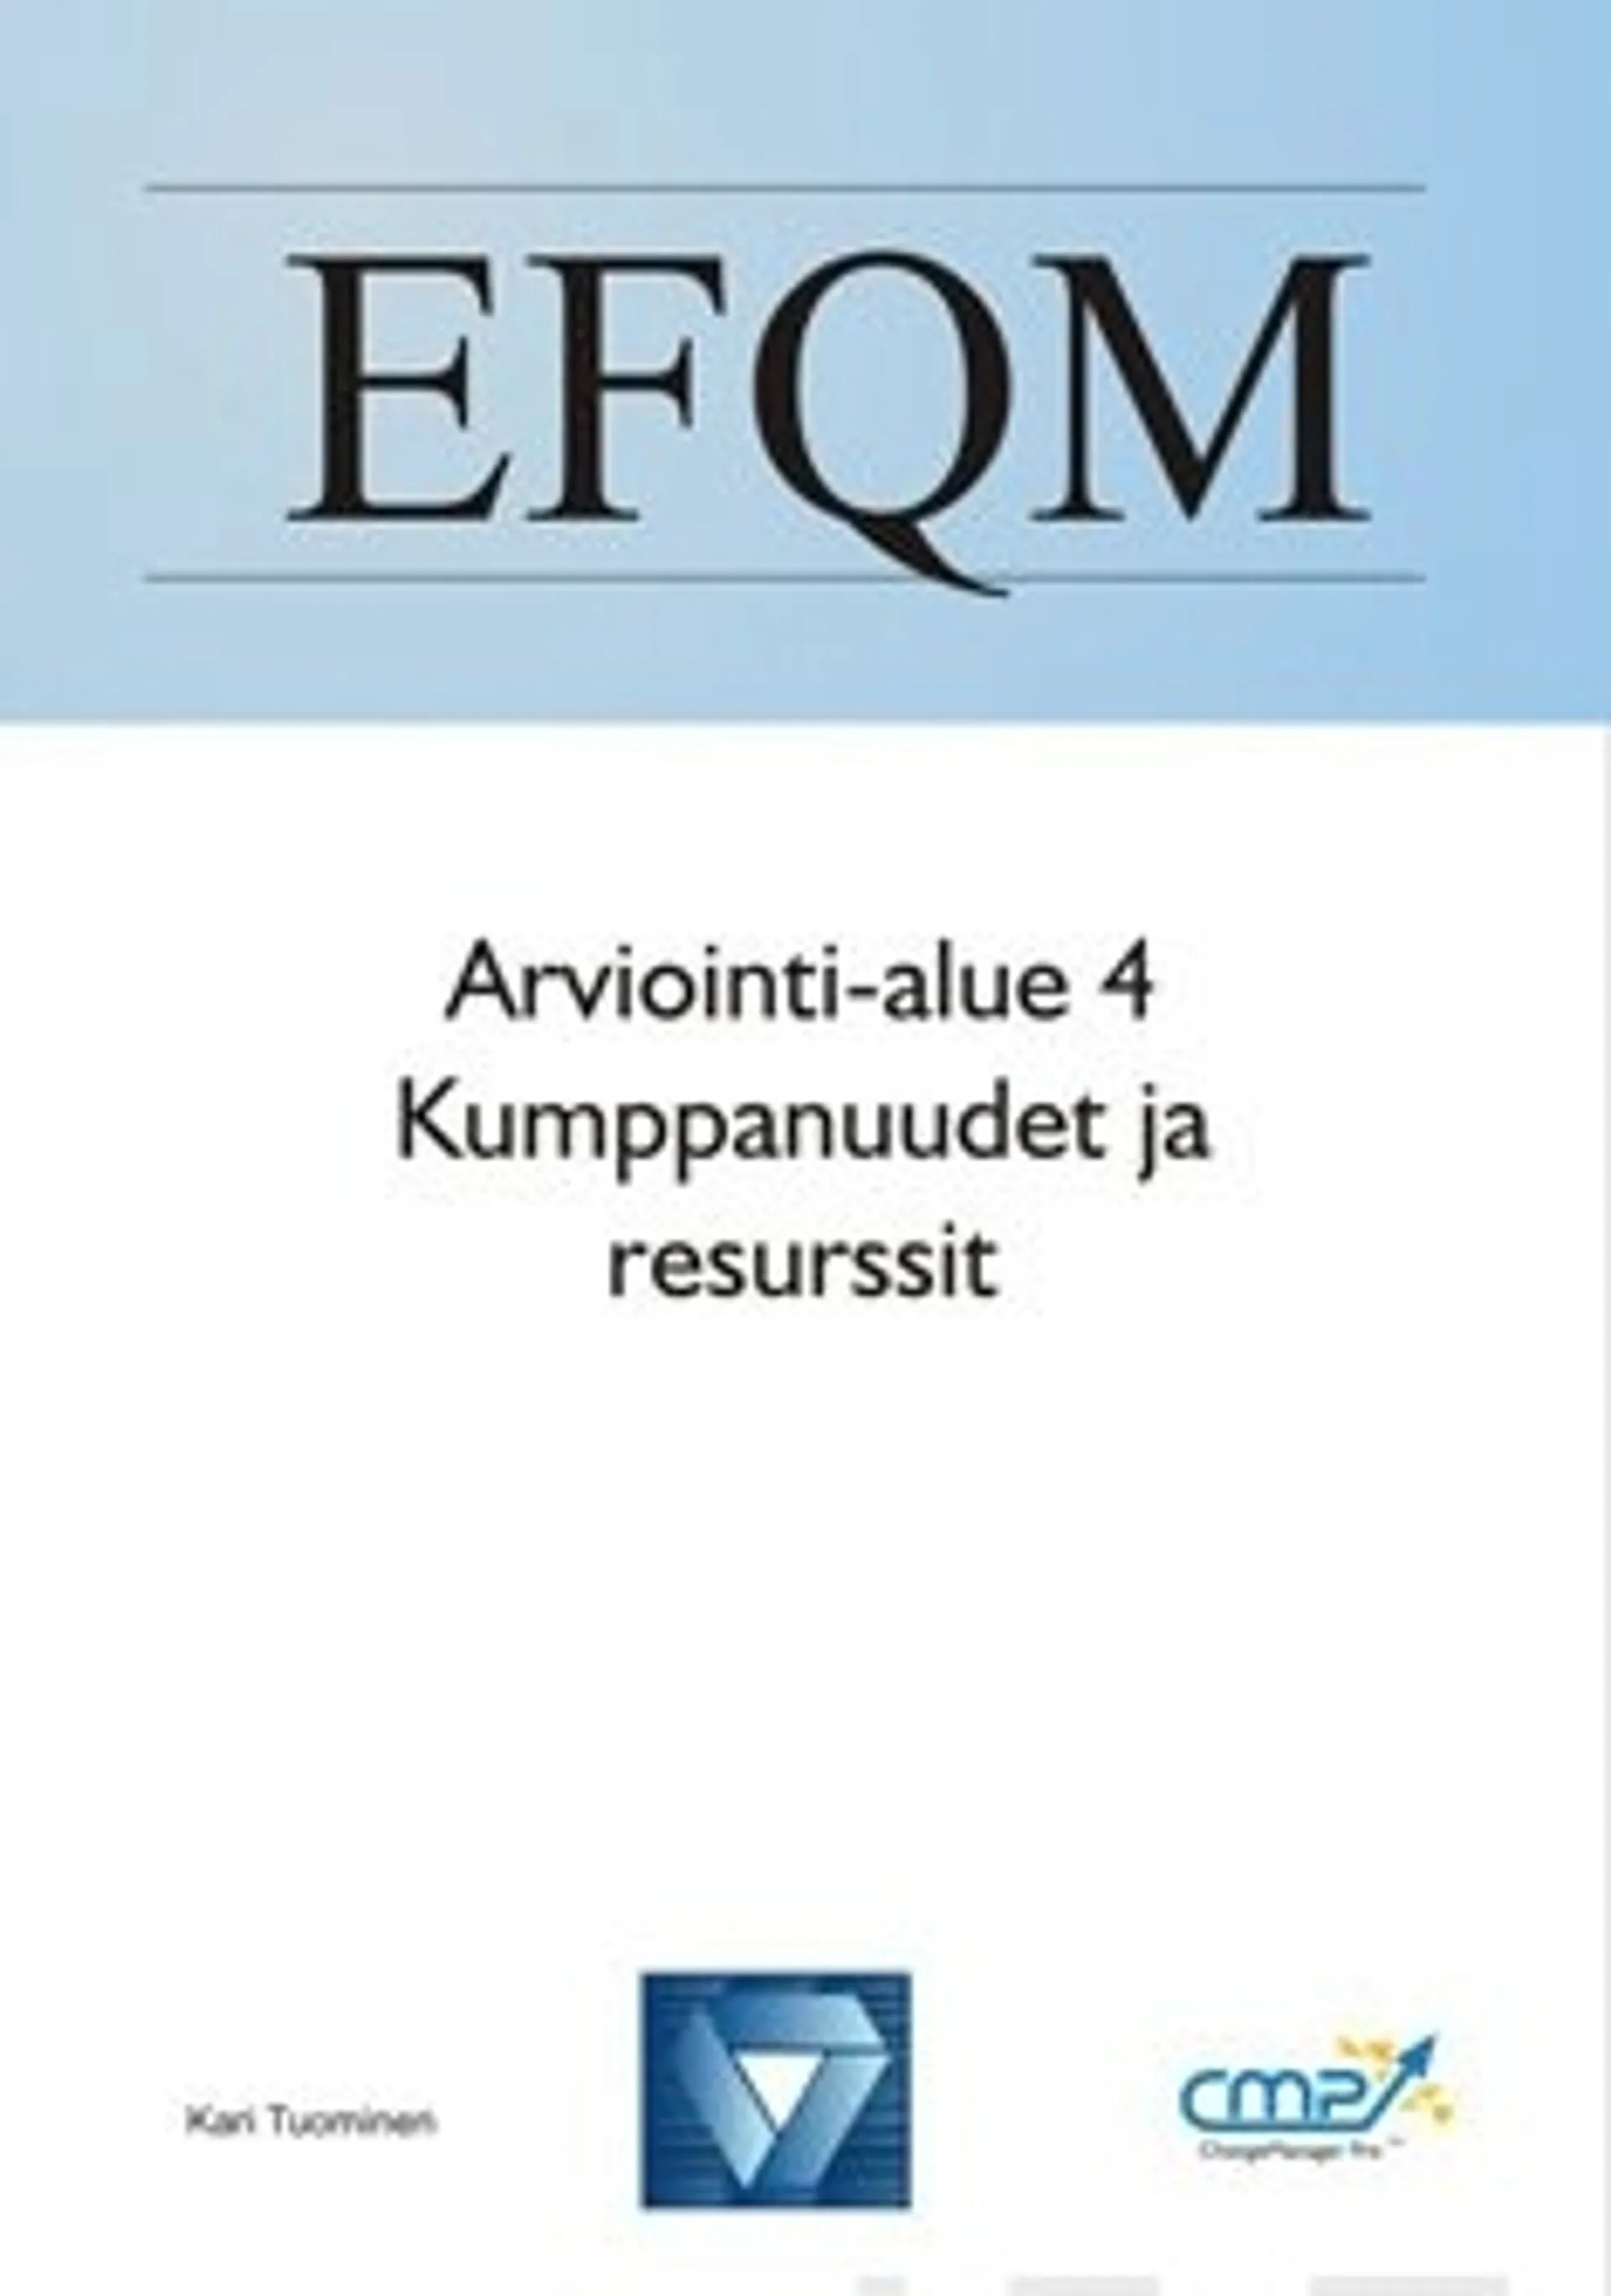 EFQM - arviointialue 4